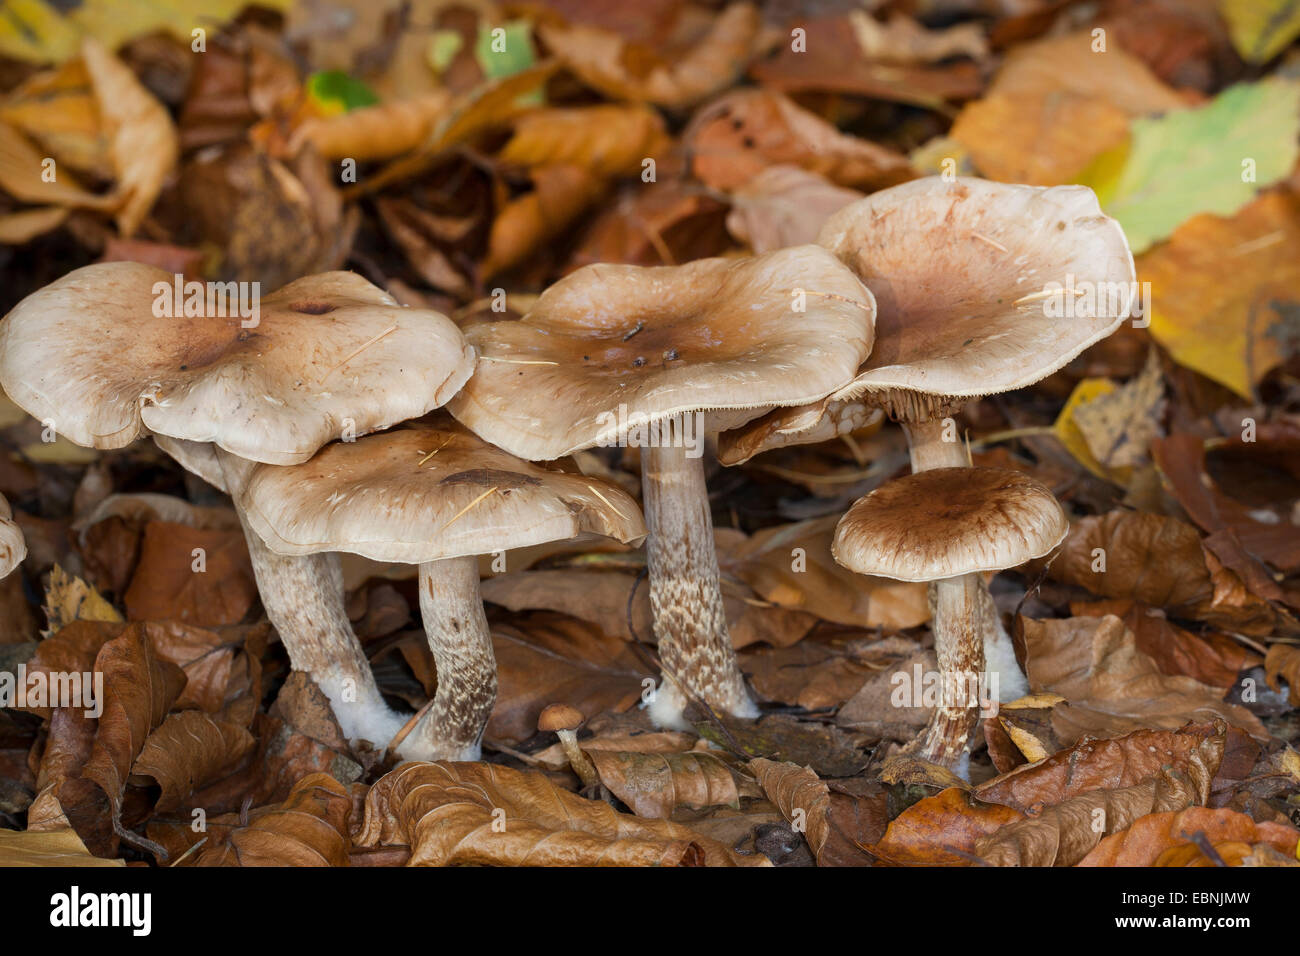 Slimy Scalycap (Pholiota lenta, Flammula lenta), five fruiting bodies on forest floor, Germany Stock Photo